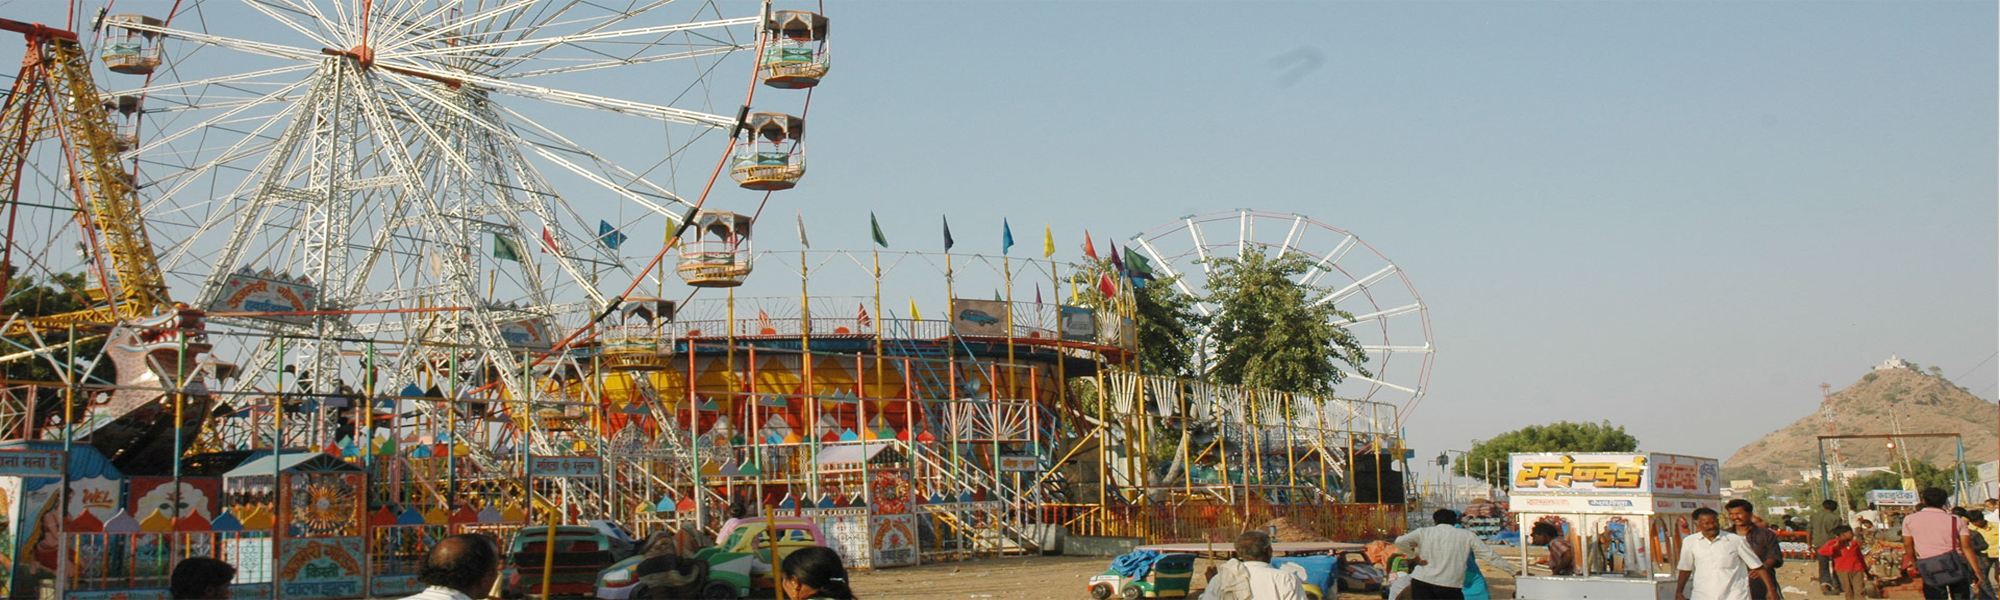 Pushkar Fair Budget Tours in India